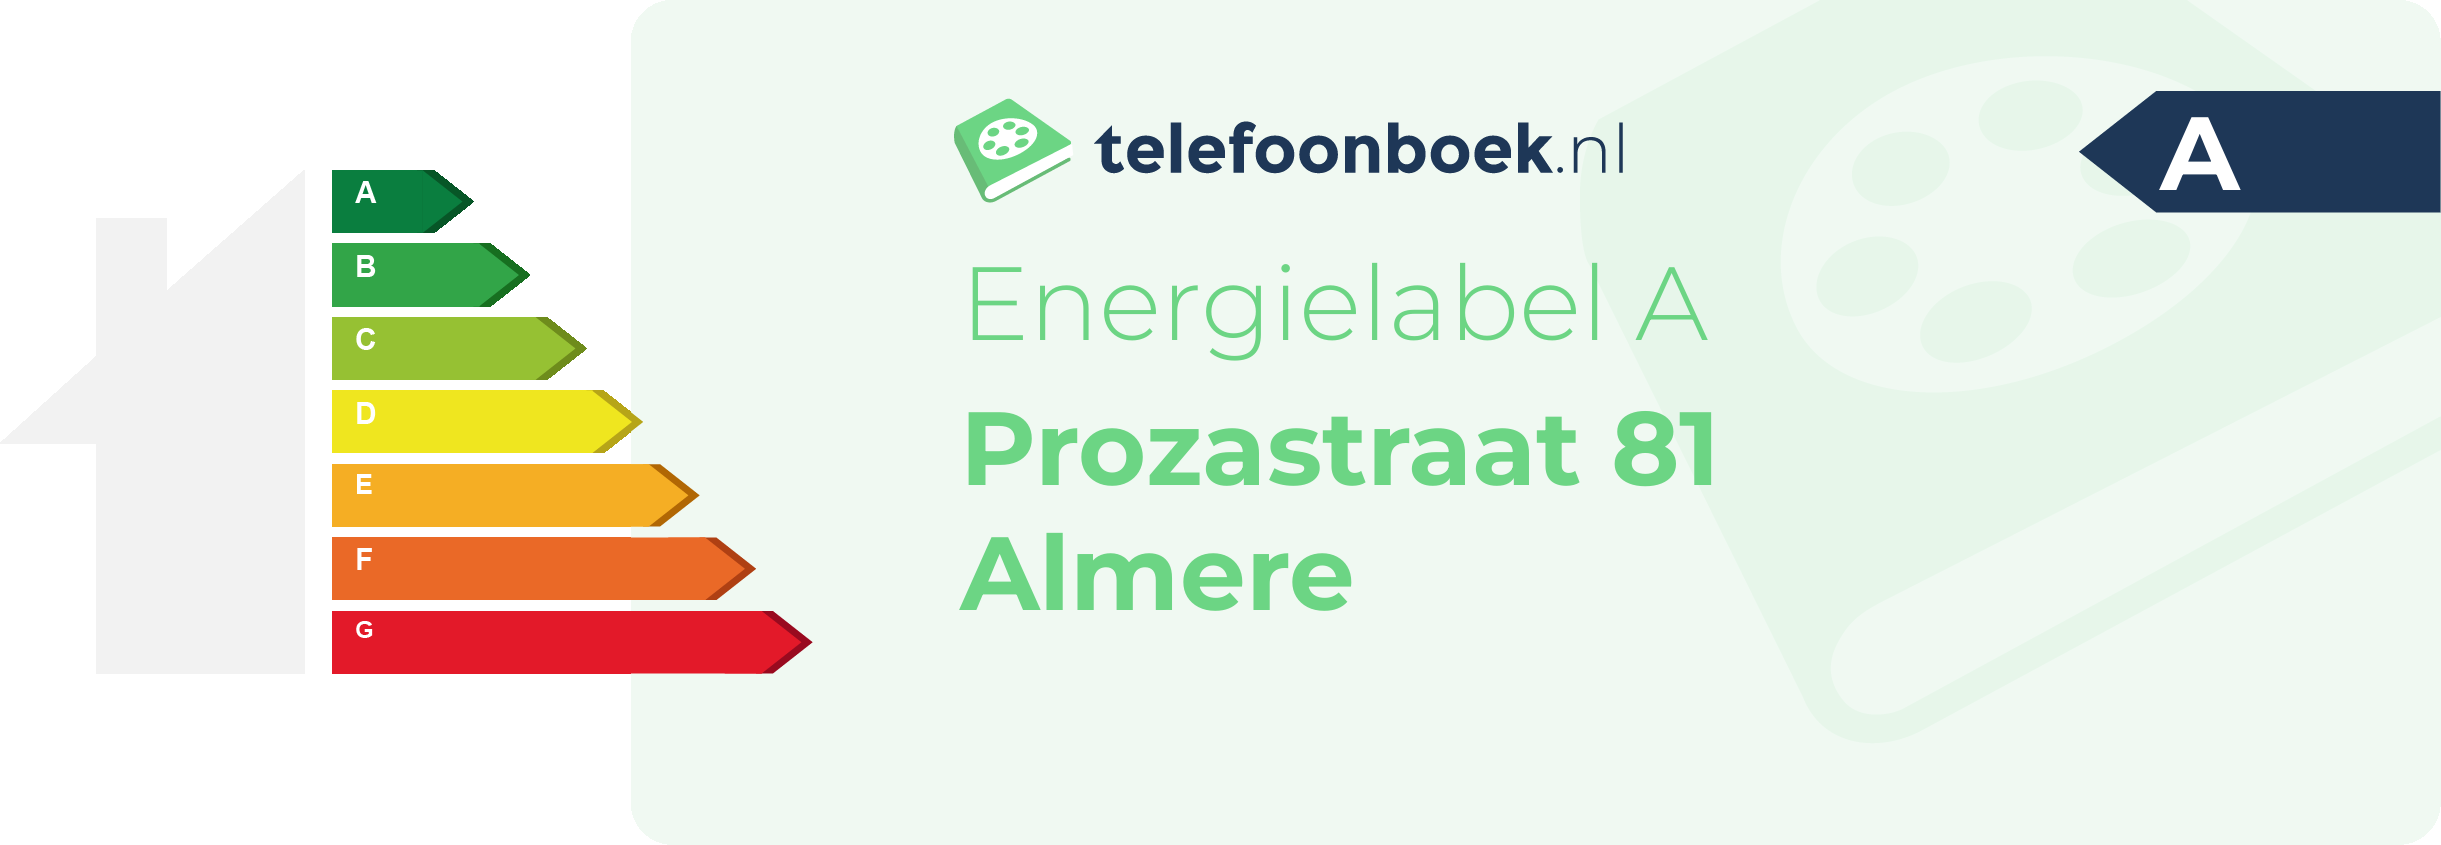 Energielabel Prozastraat 81 Almere